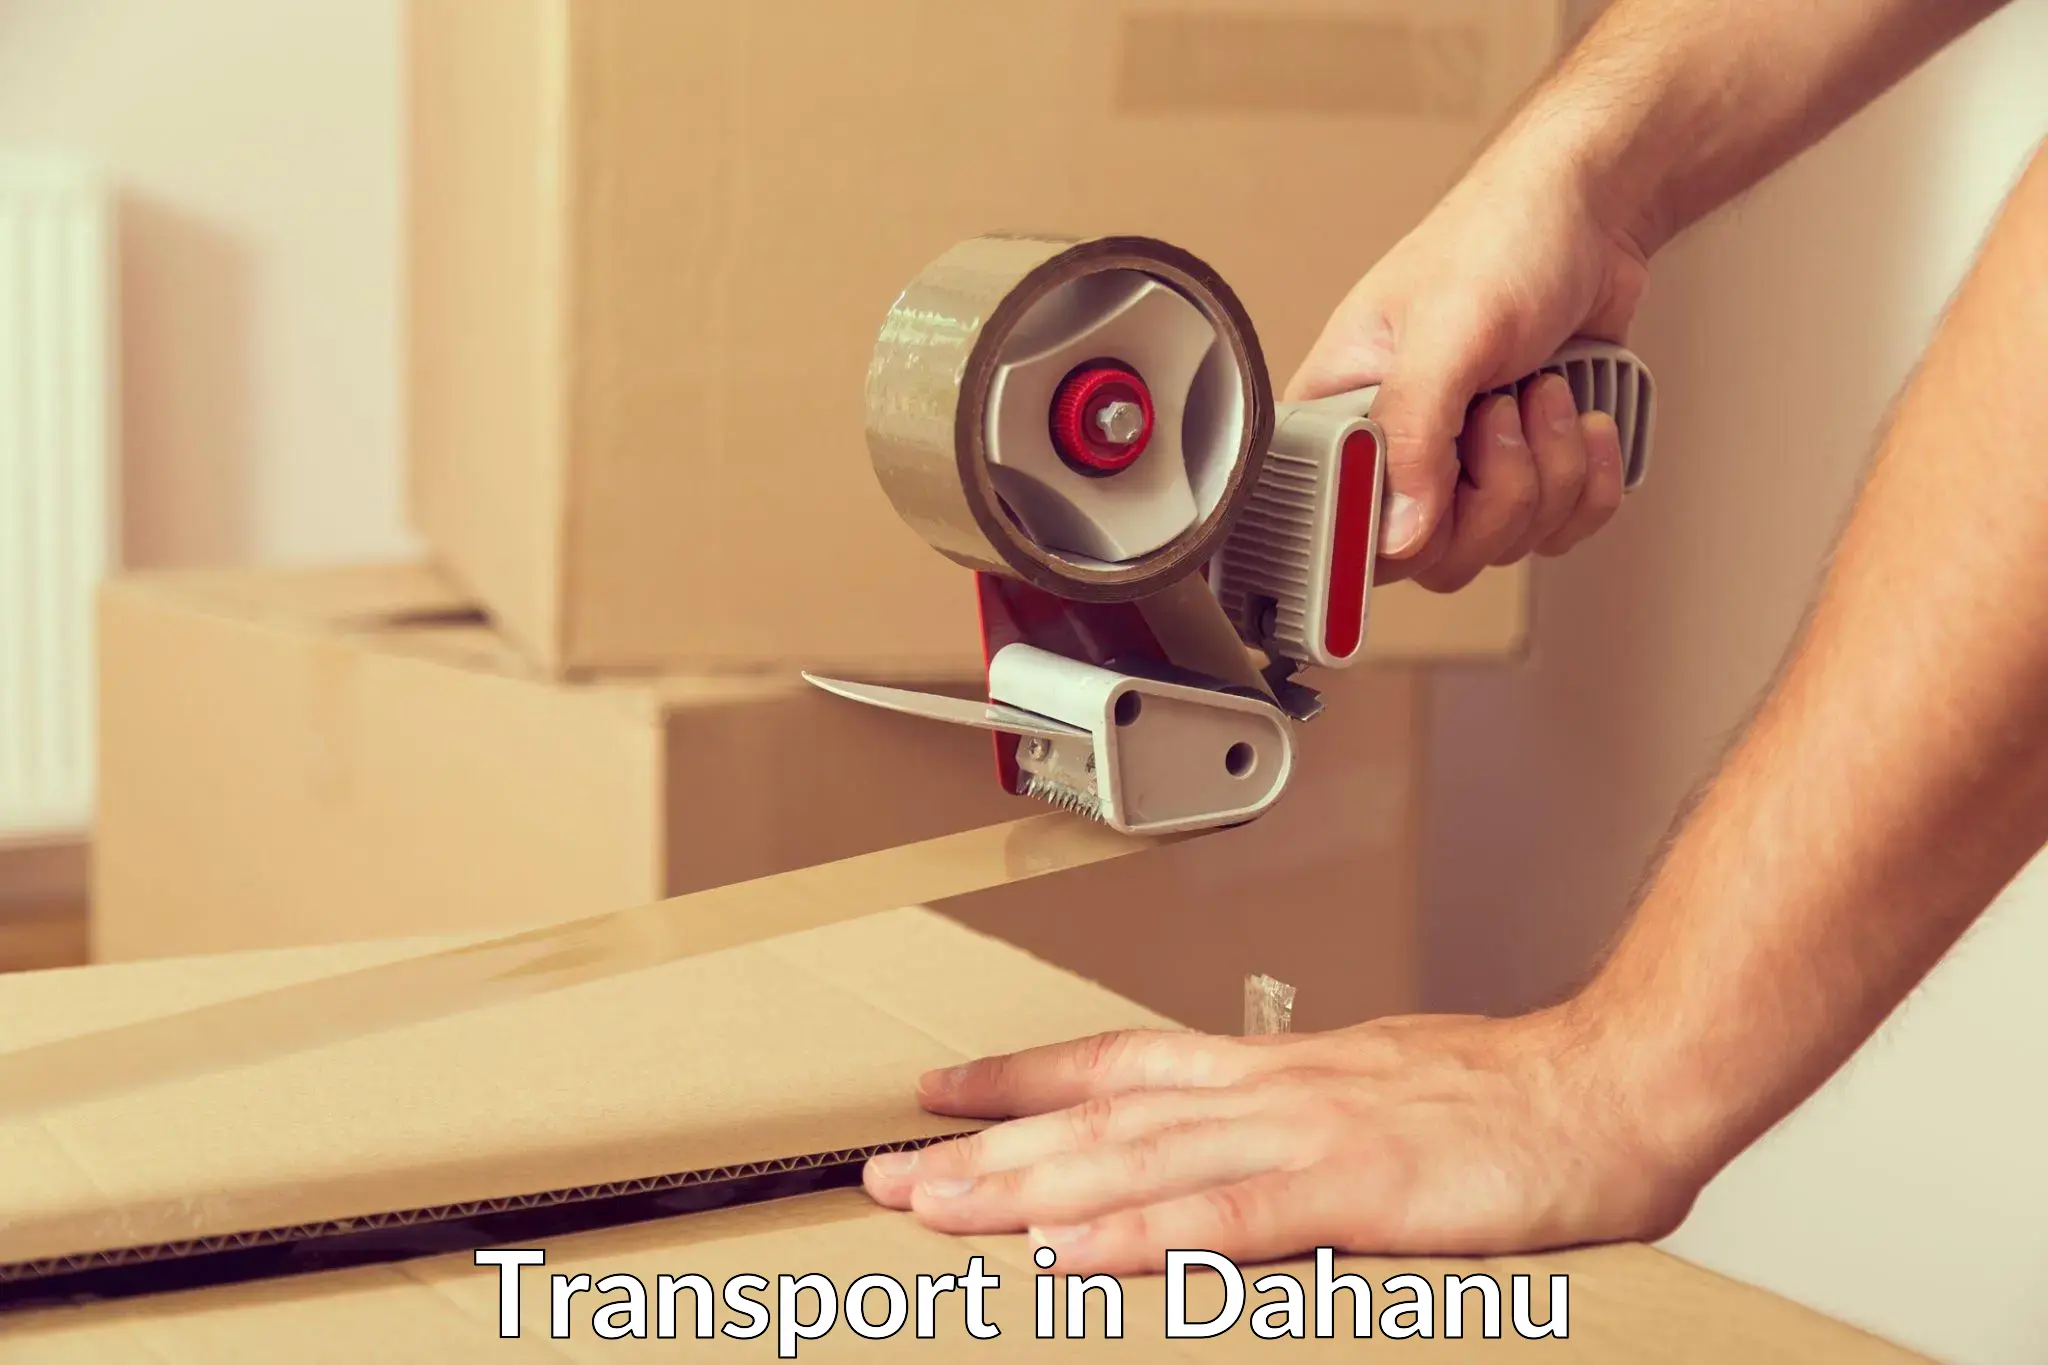 Transportation services in Dahanu